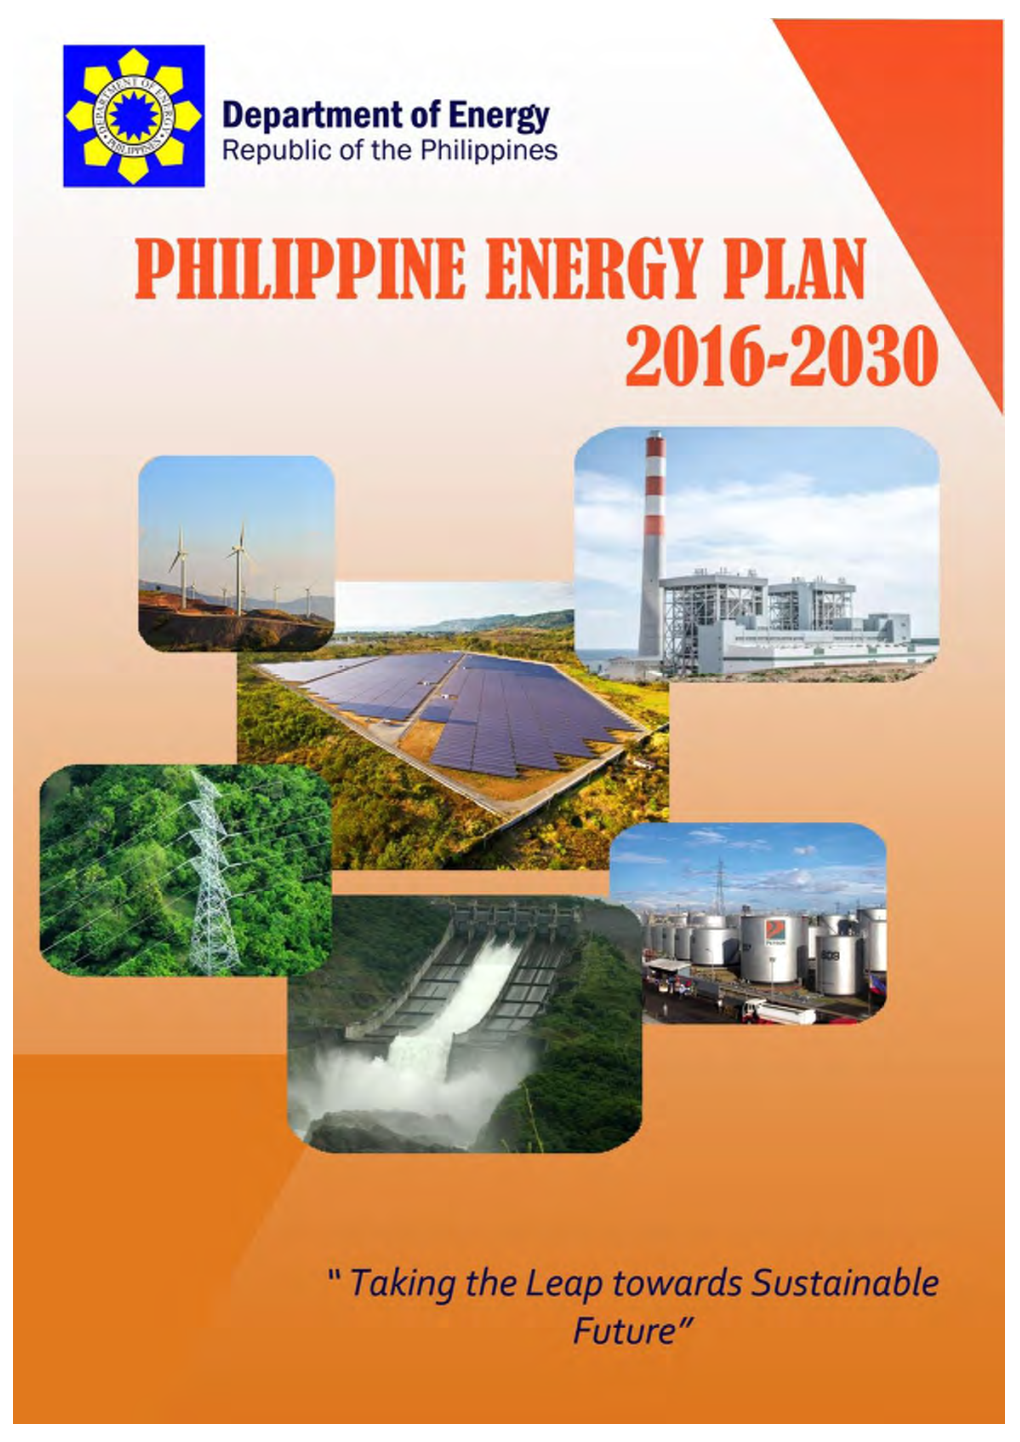 PHILIPPINE ENERGY PLAN 2012-2030 Update